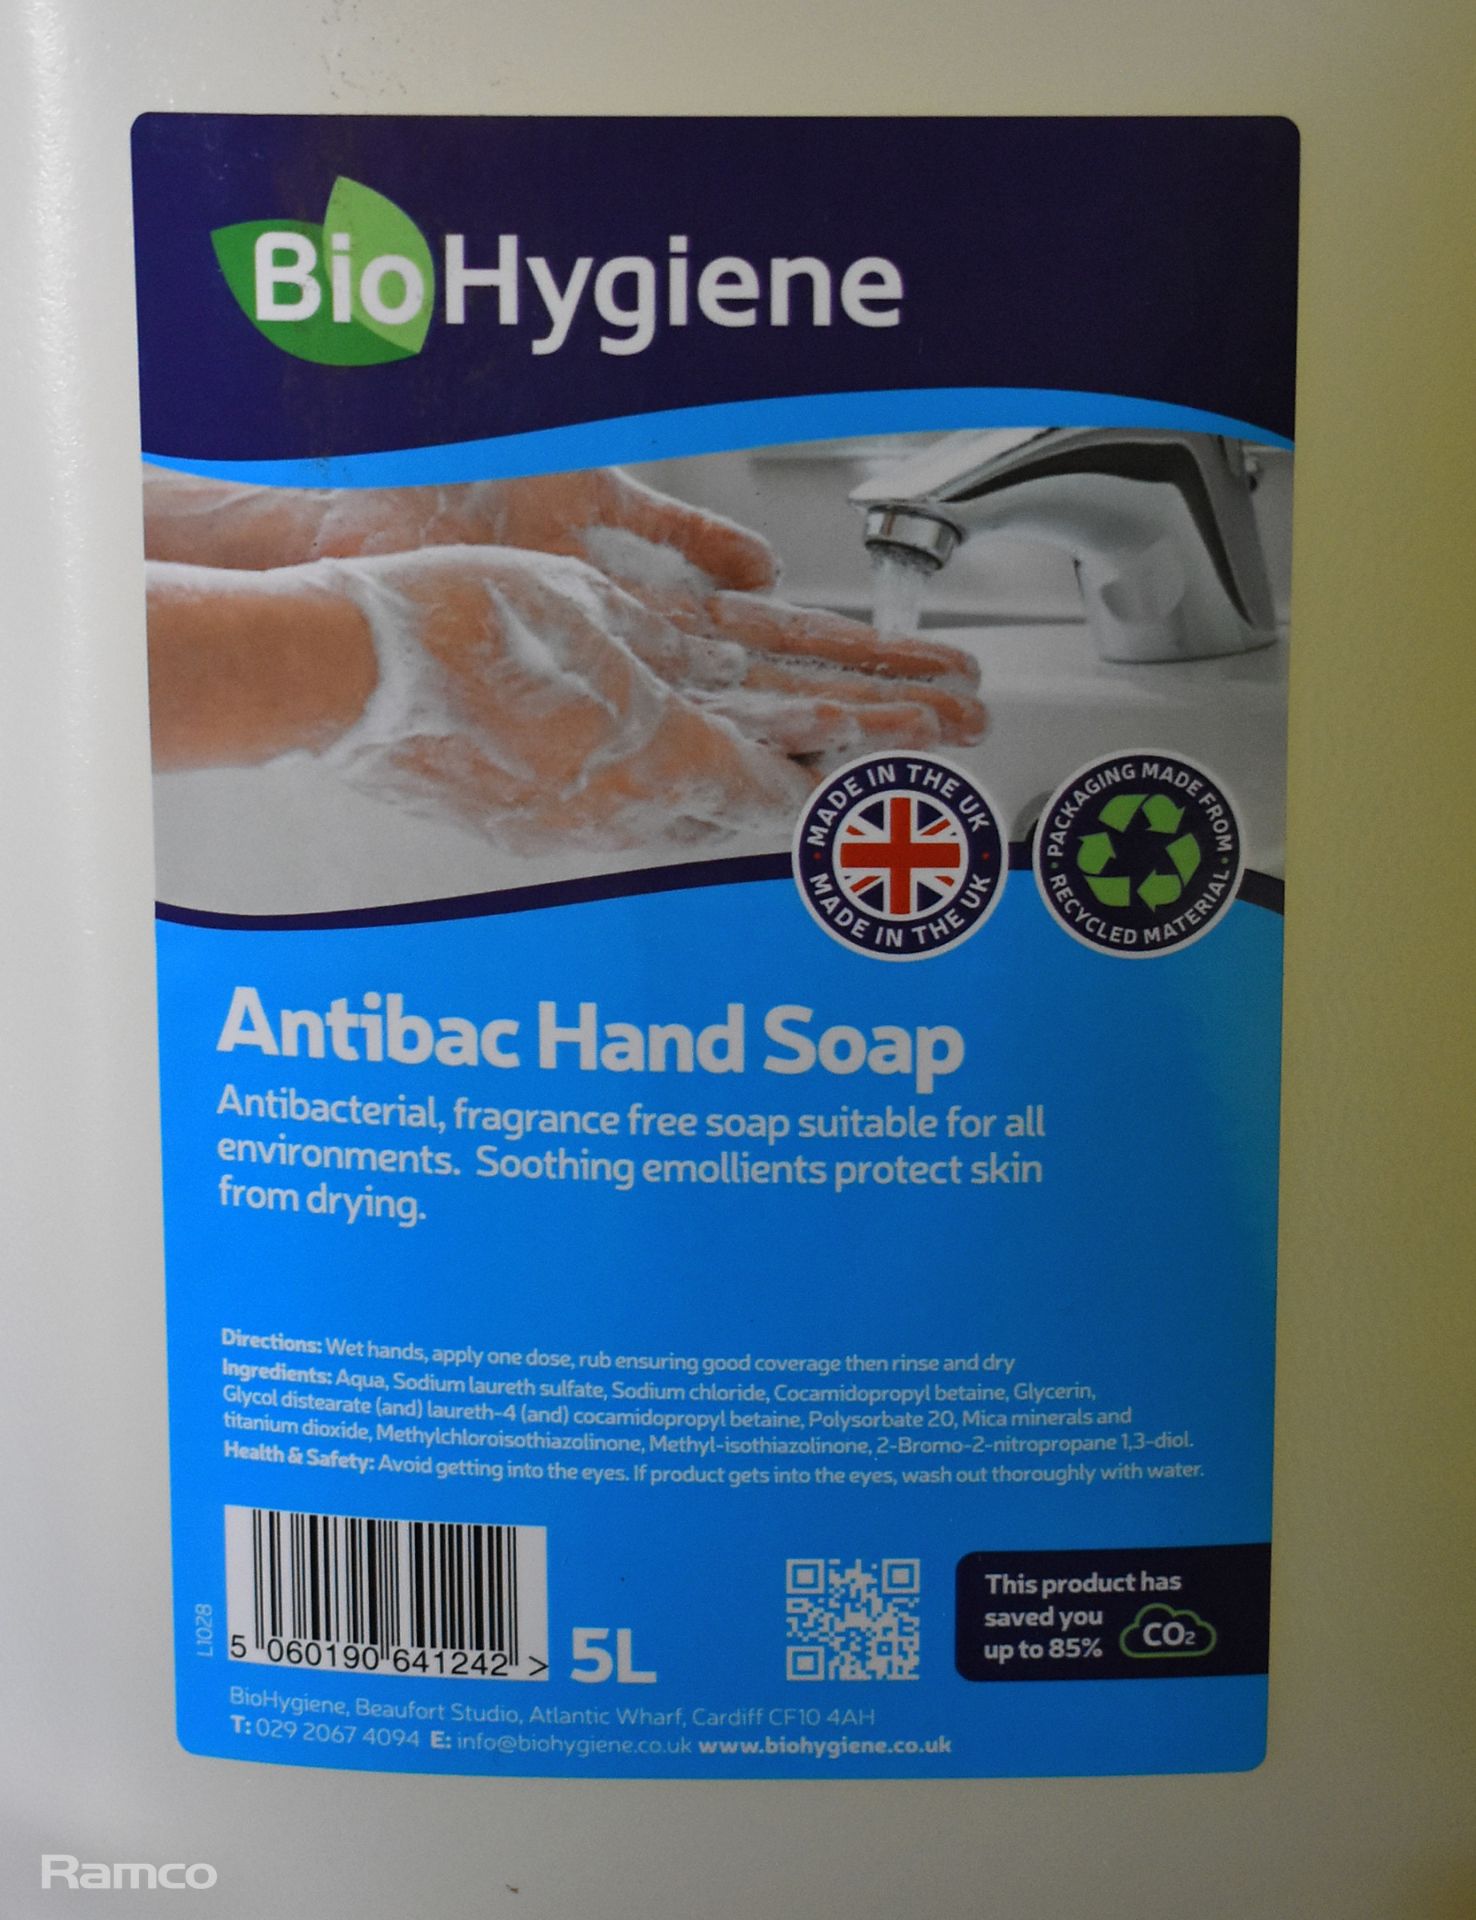 6x bottles of Pal International safetywash - 5L, 2x bottles of BioHygiene anti-bac hand soap - Image 4 of 4